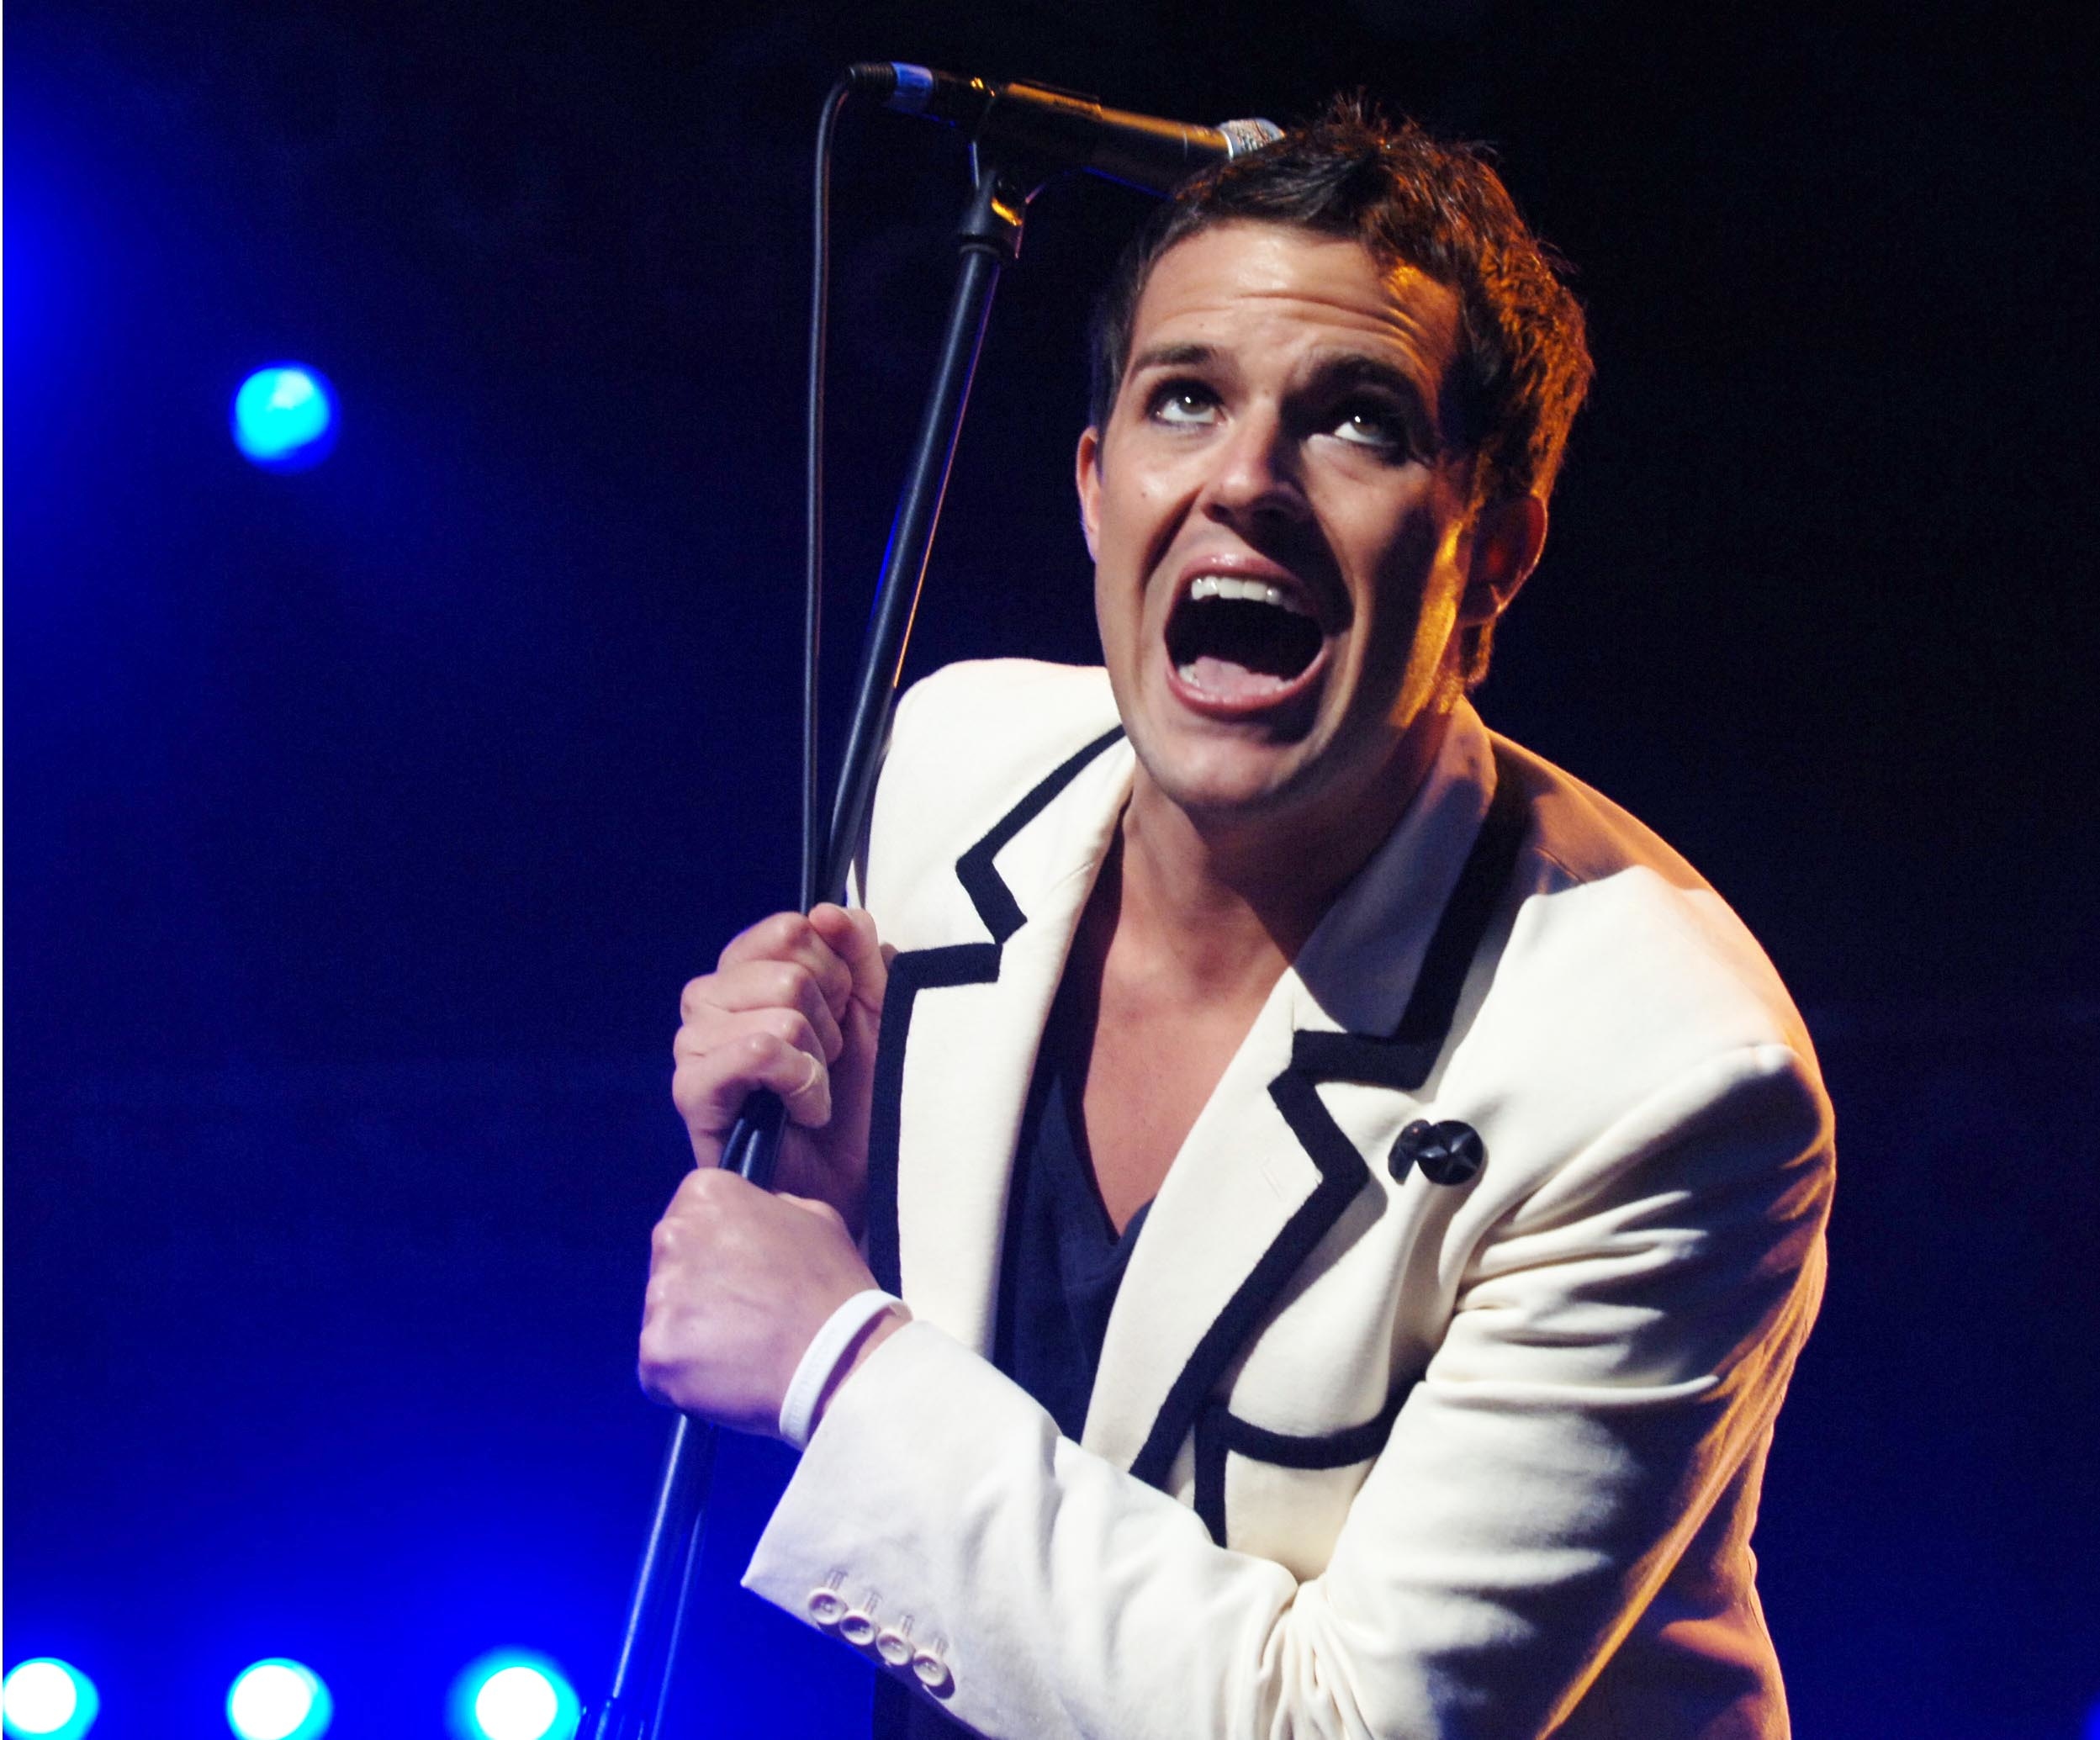 The Killers Announces Las Vegas Residency Performing Debut Album 'Hot Fuss